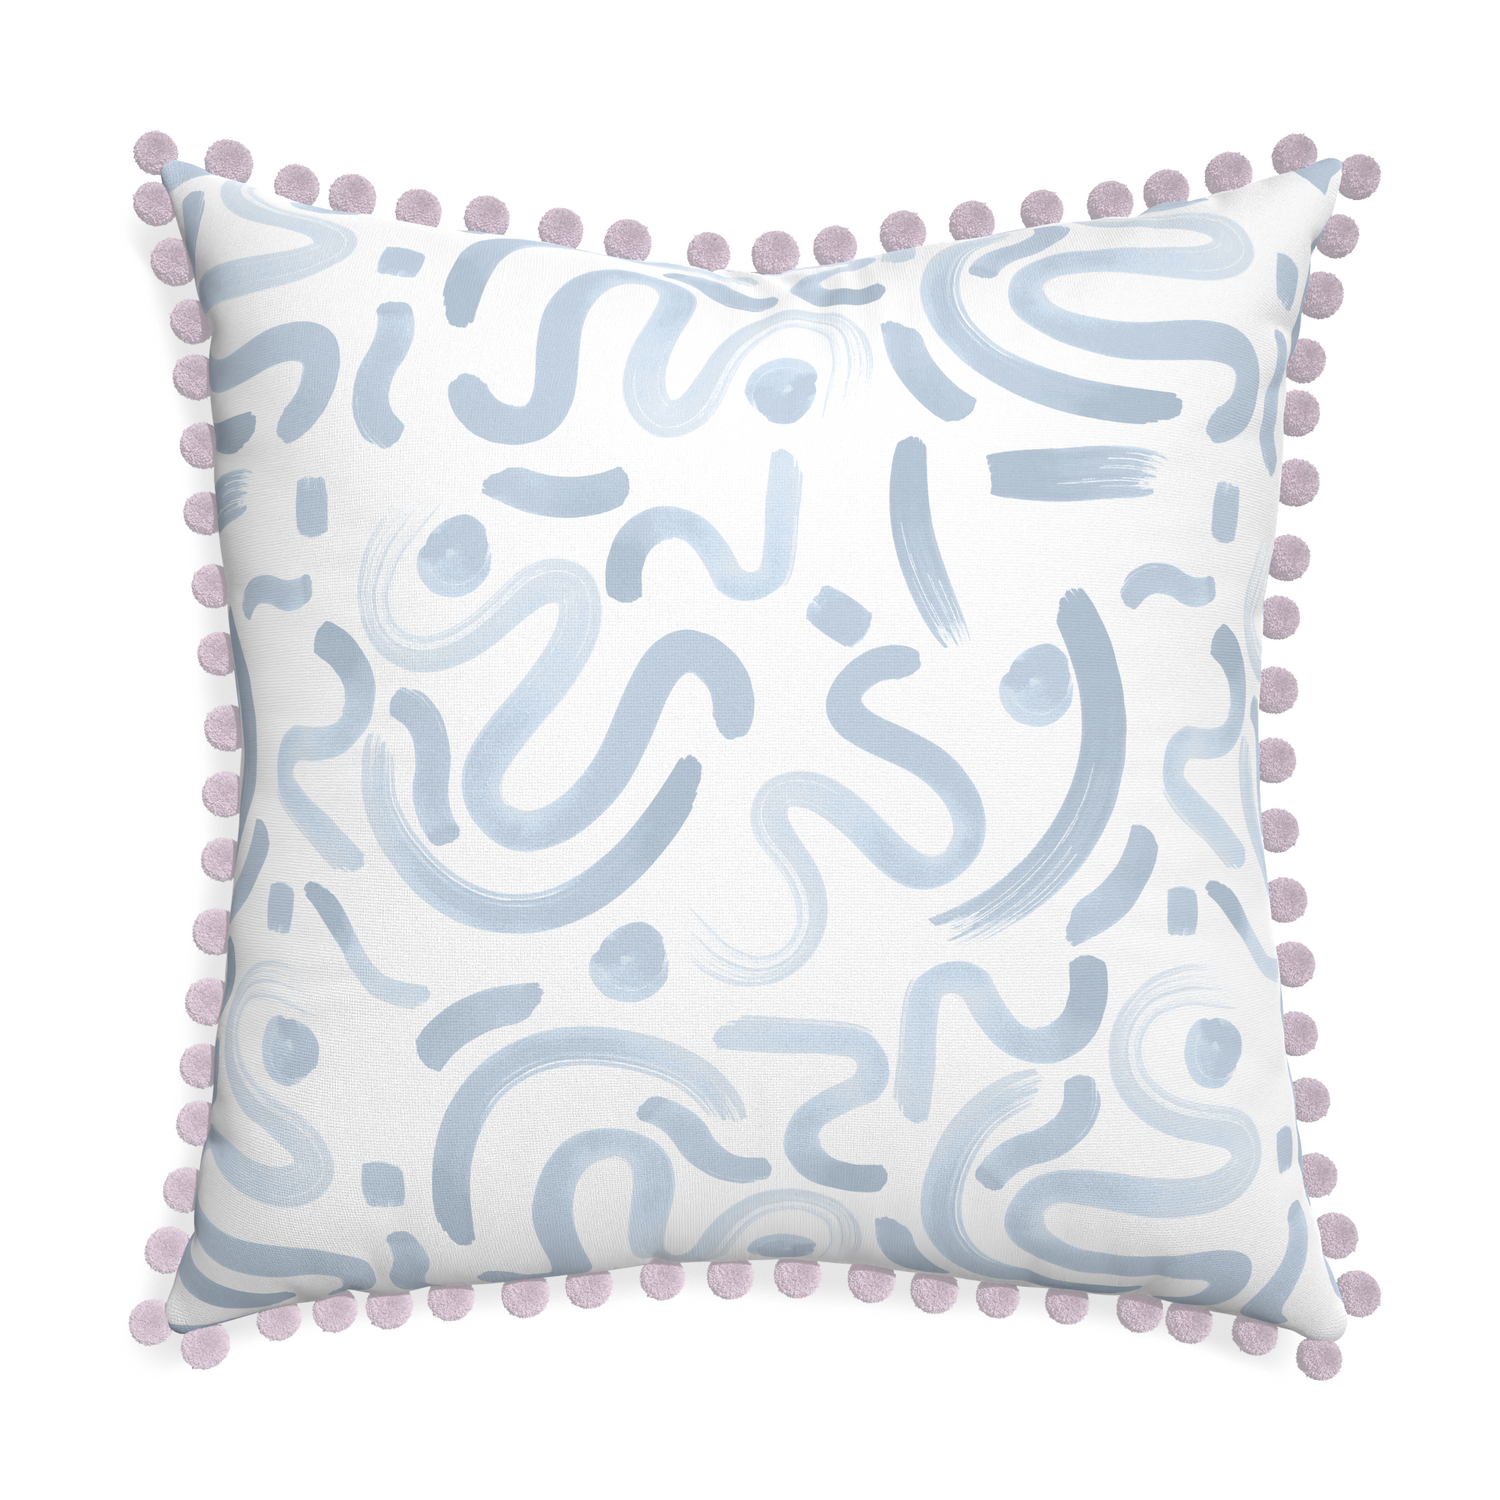 Euro-sham hockney sky custom pillow with l on white background